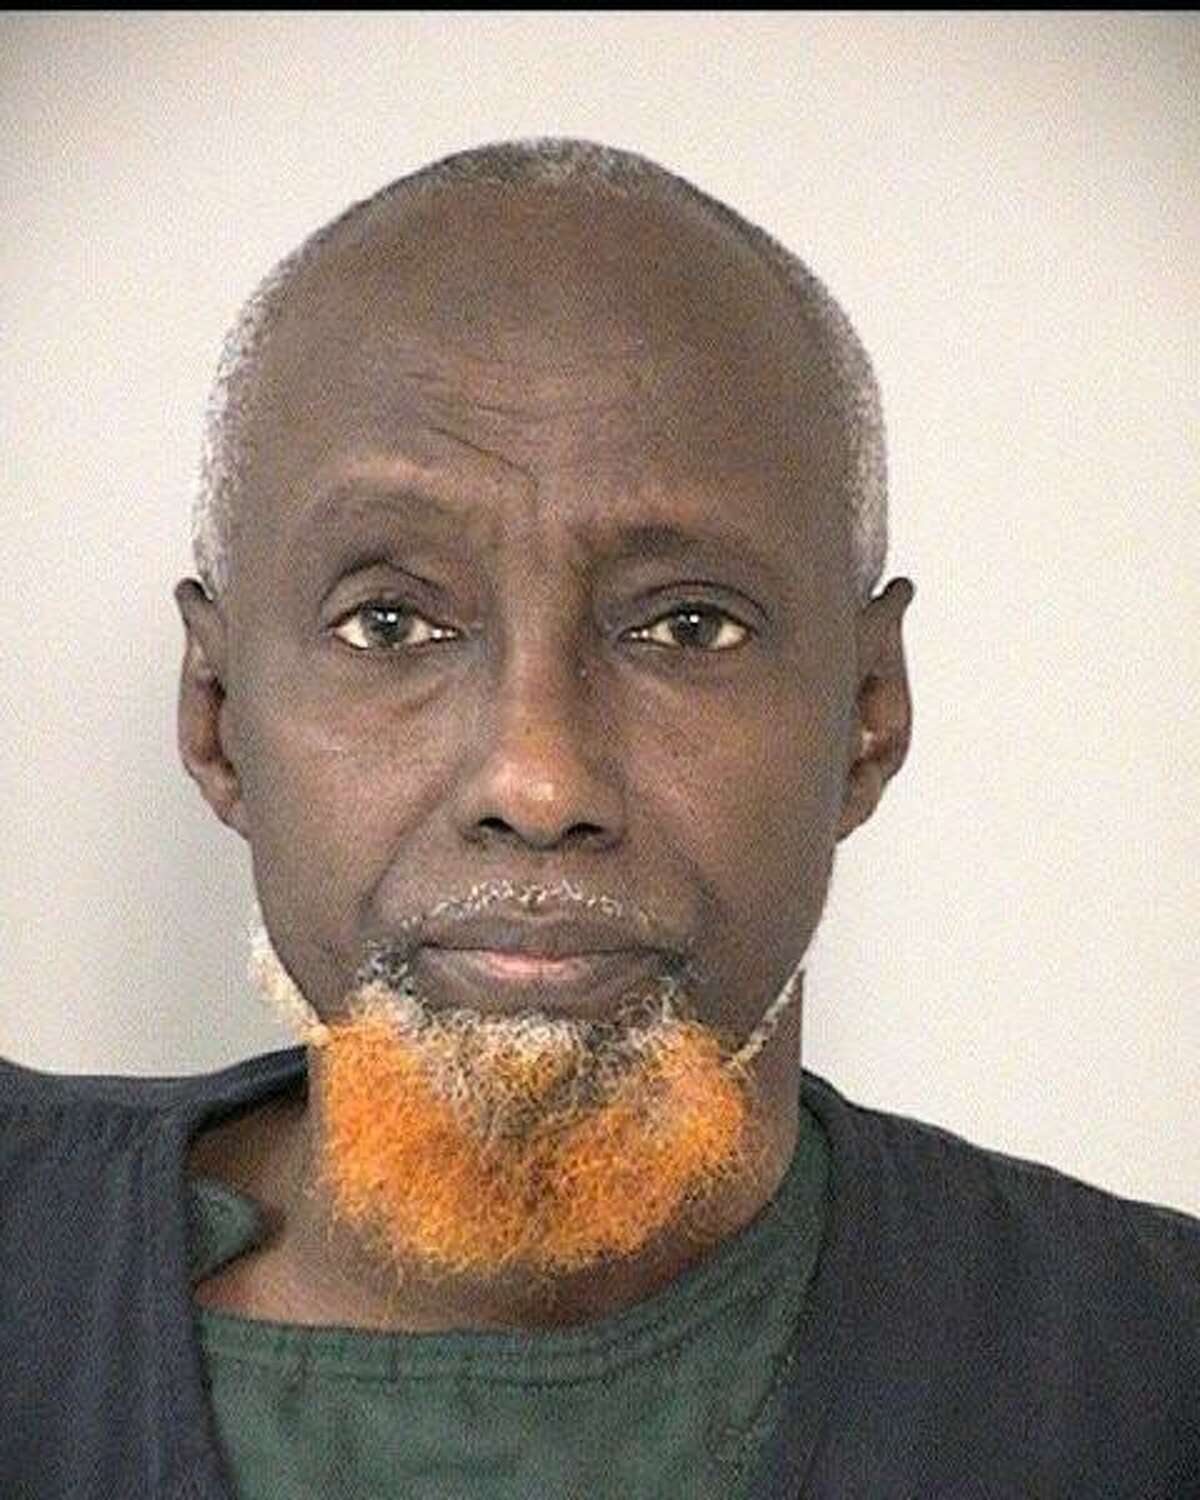 Mohamed Omar Ali has been arrested for allegedly committing four sex crimes against children.